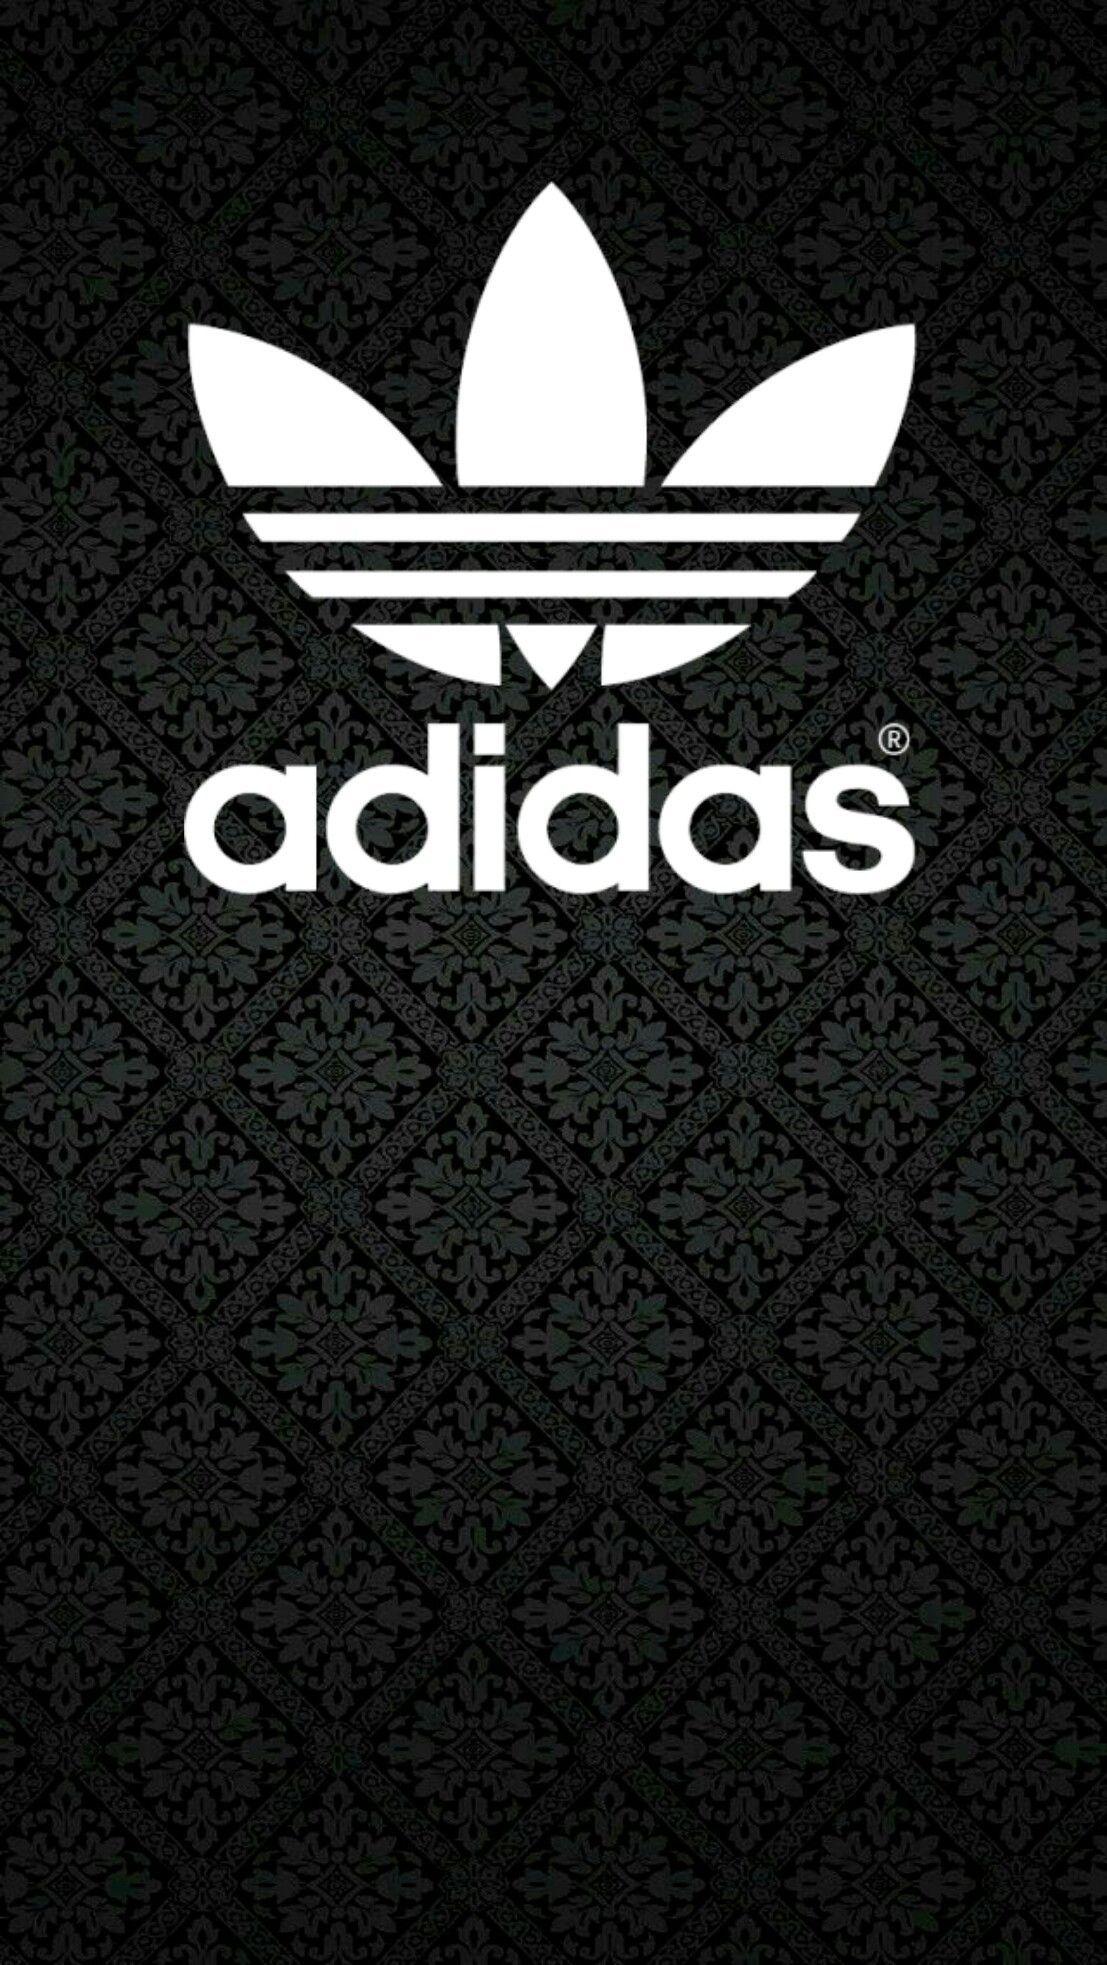 adidas #black #wallpaper #android #iphone. Adidas design